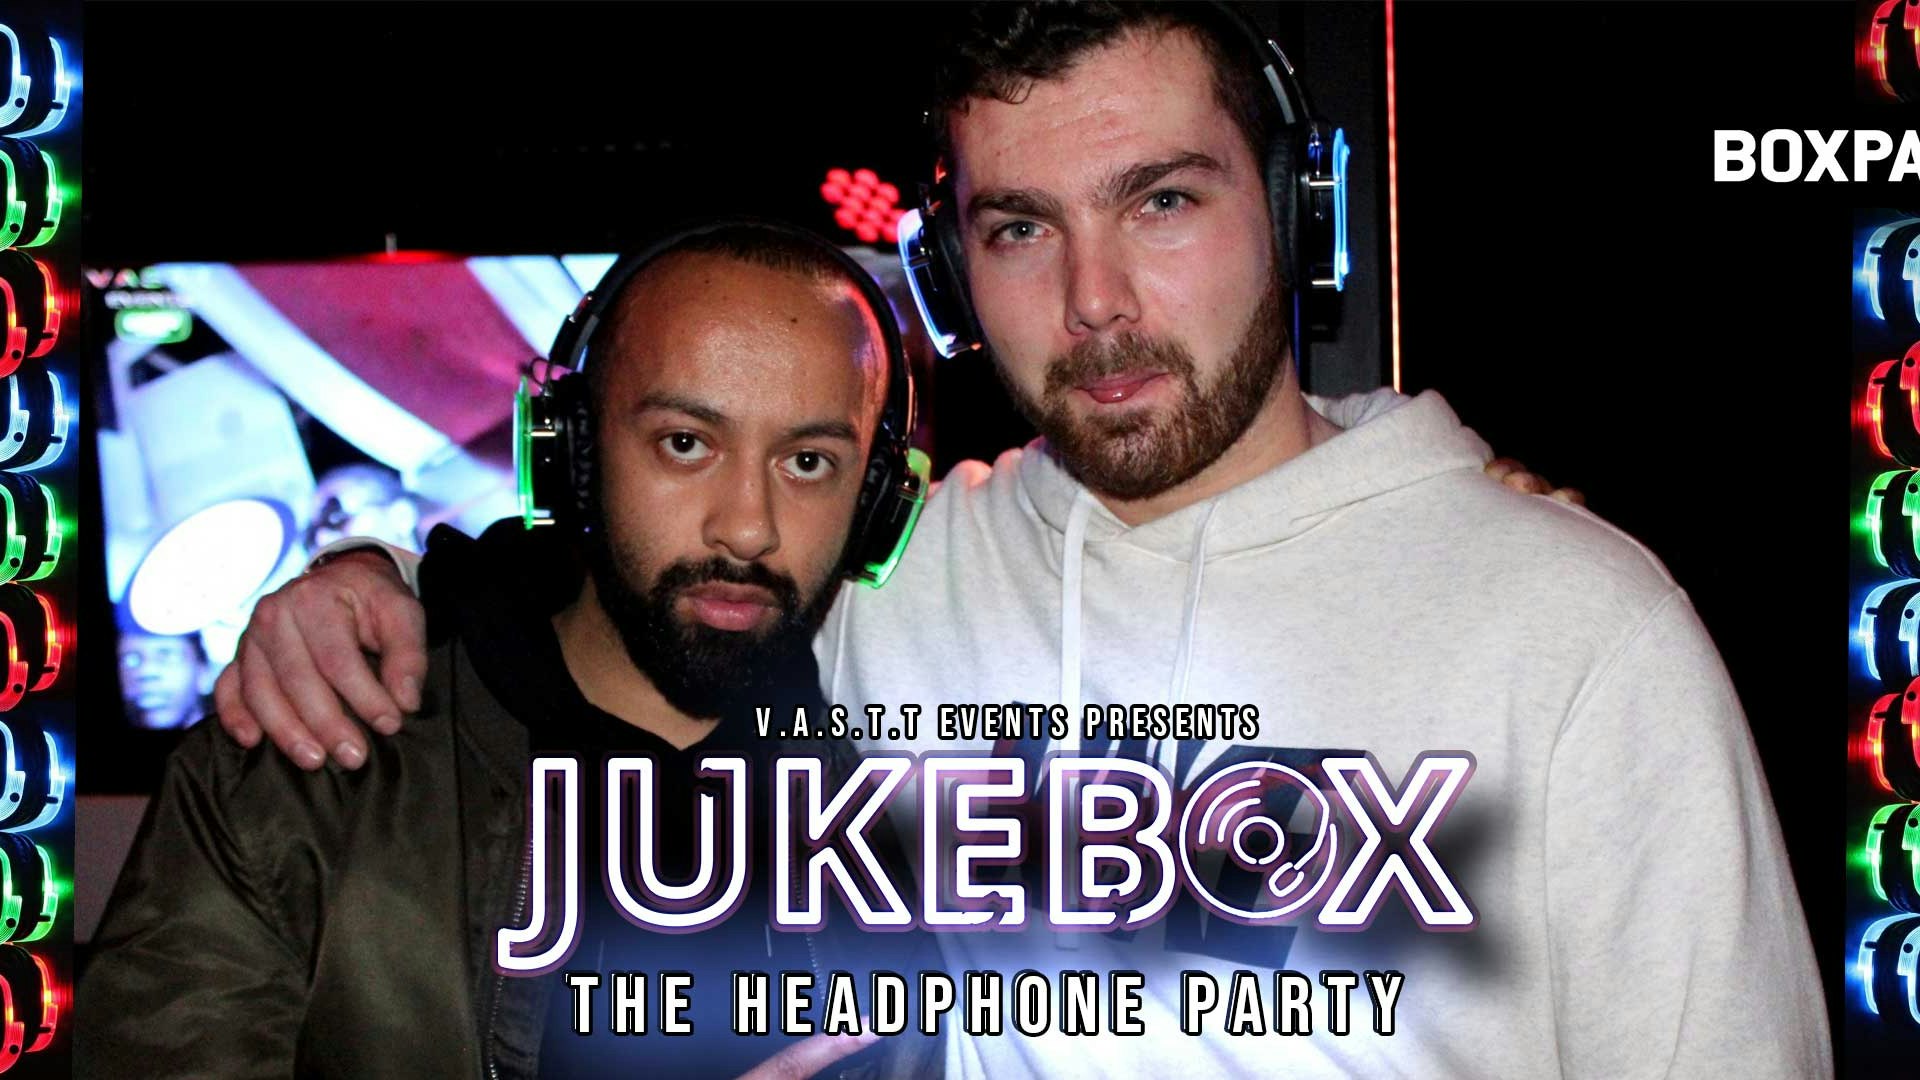 Jukebox – The Headphone party @Boxpark Croydon